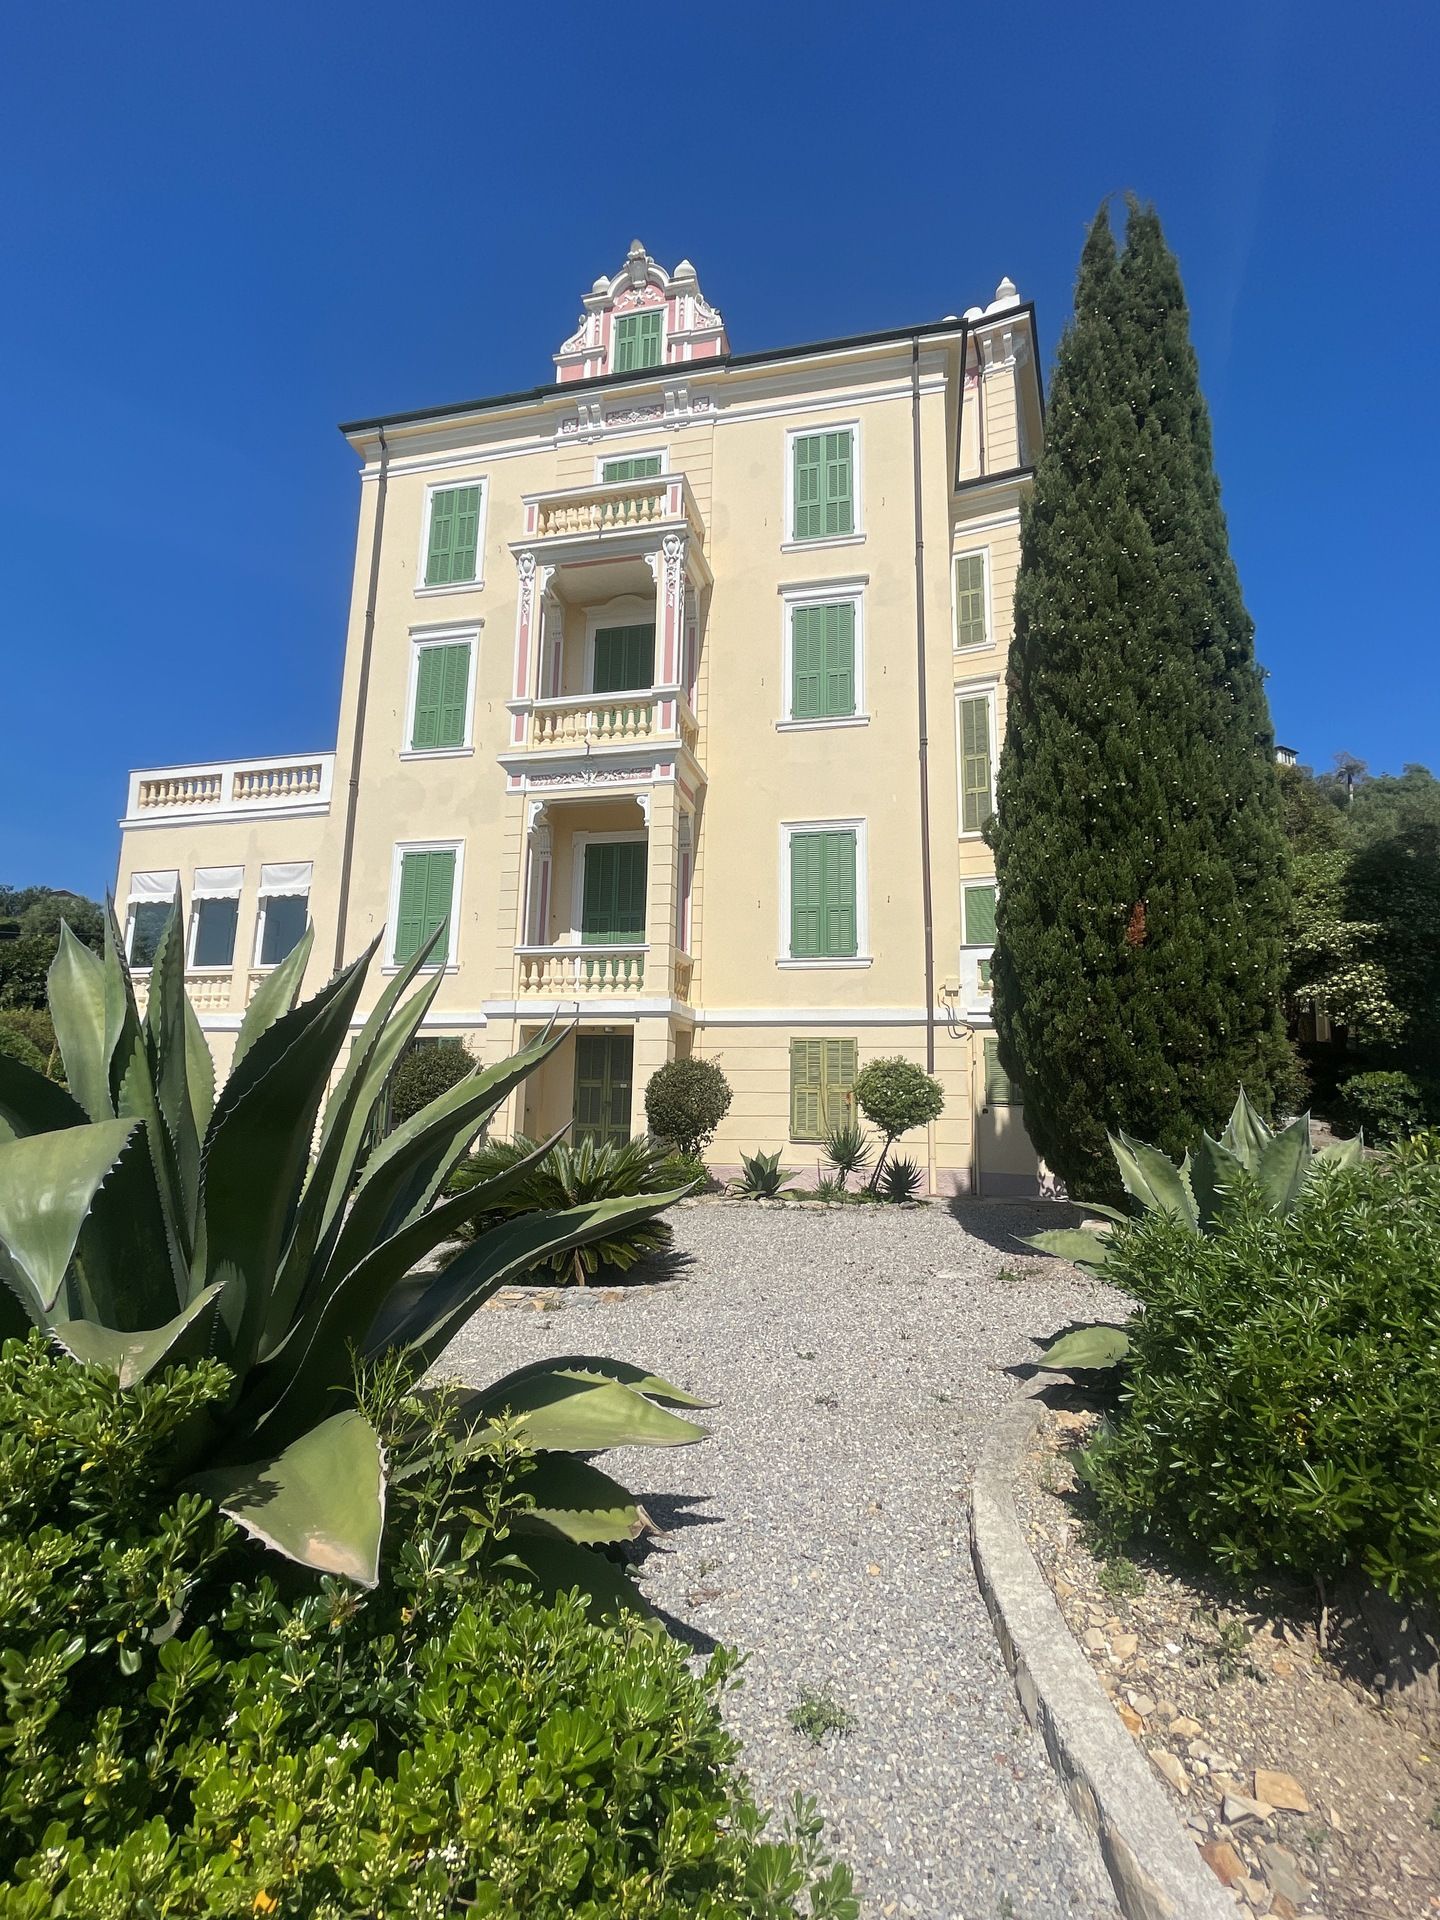 Se vende villa in zona tranquila Bordighera Liguria